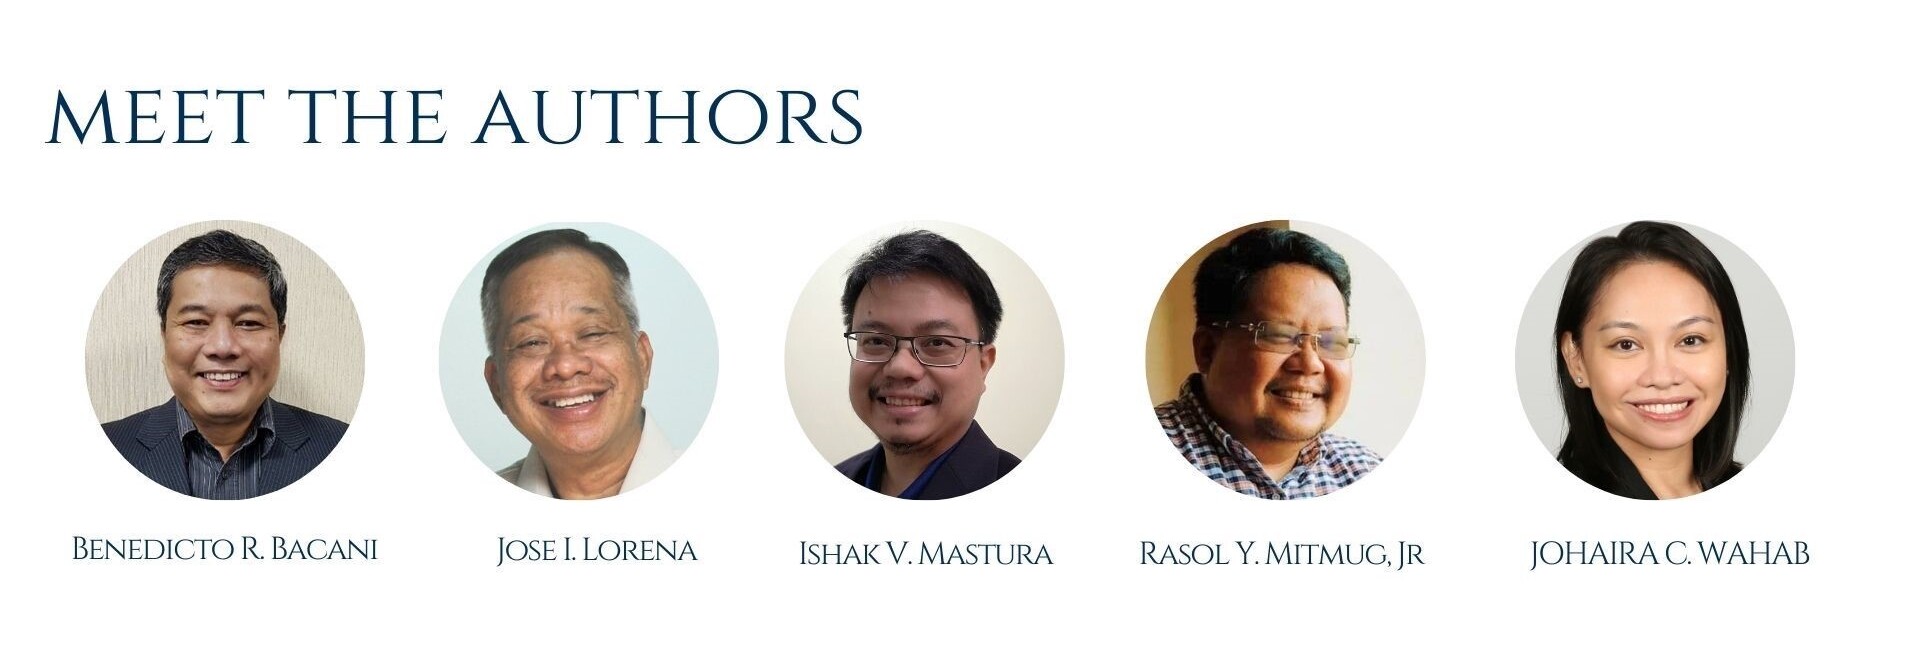 Meet the Authors 1